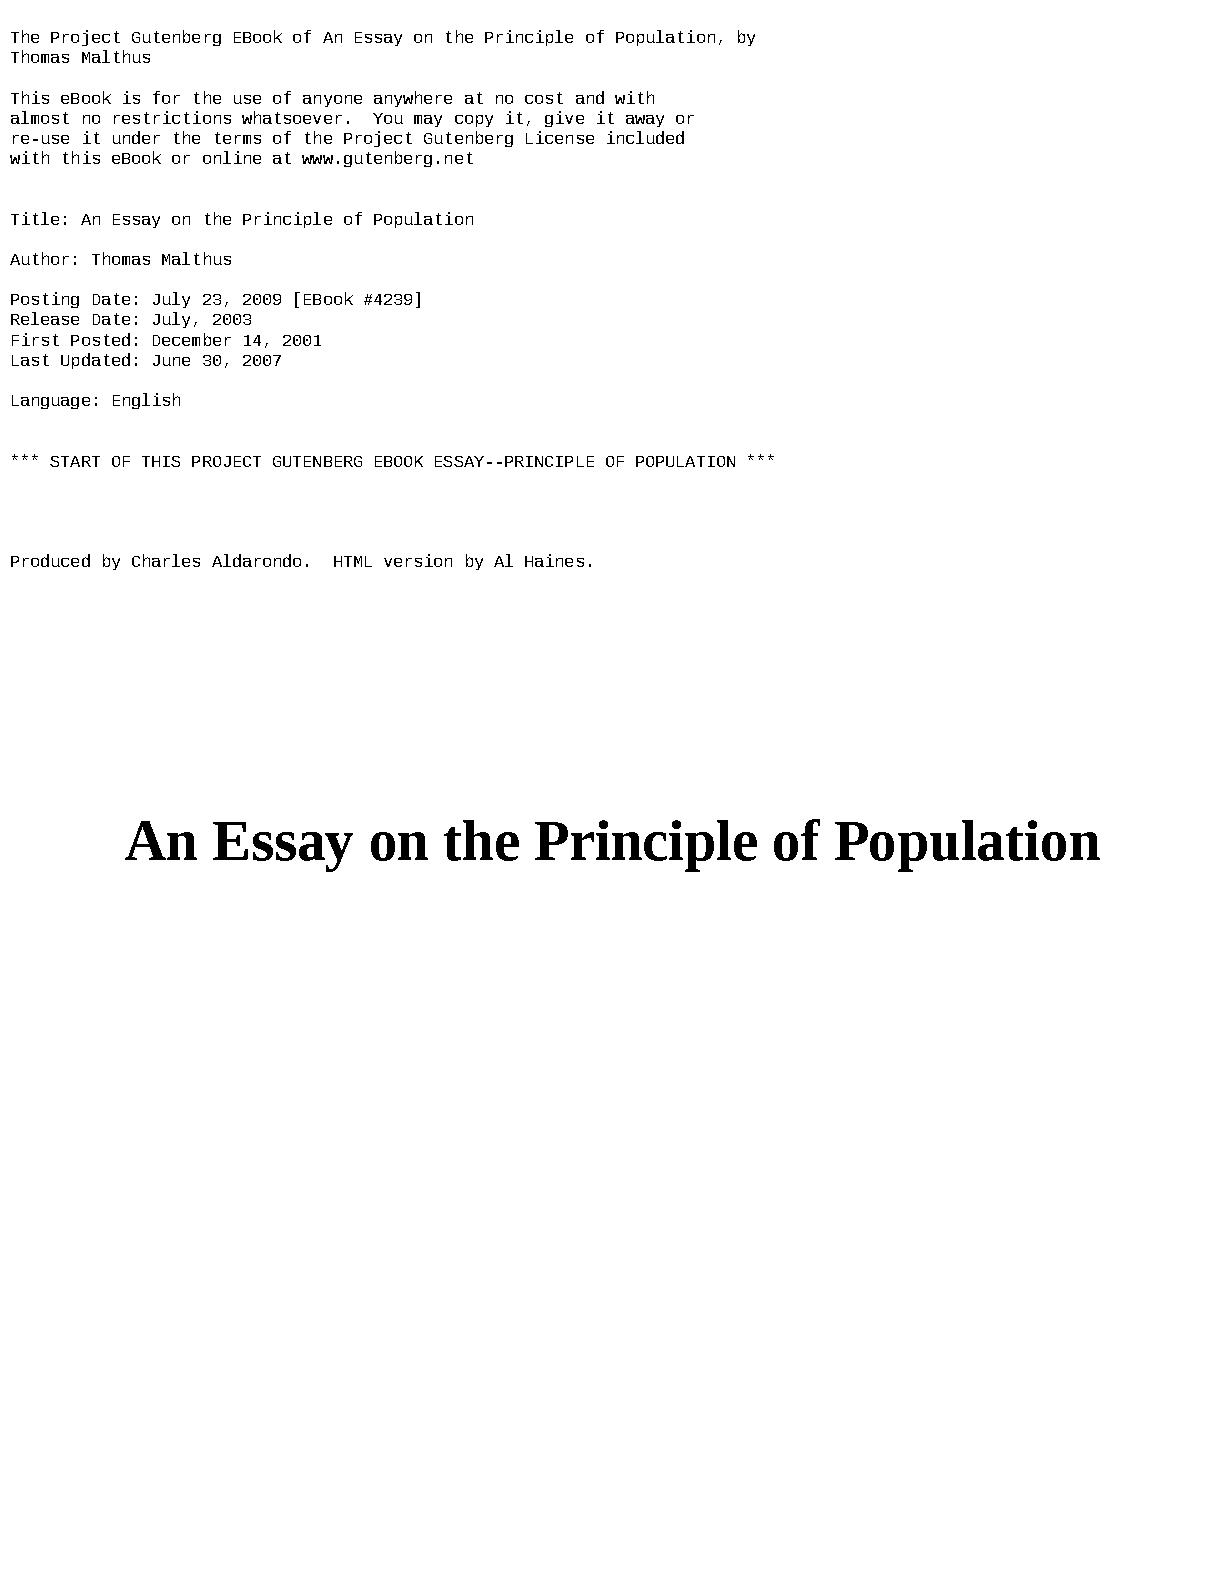 essay on human population